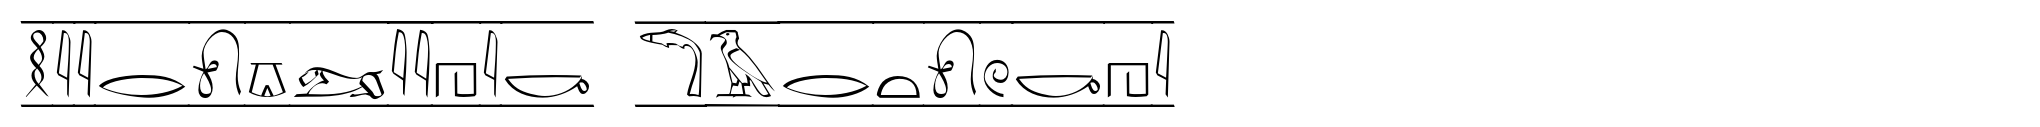 Hieroglyhic Cartouche image